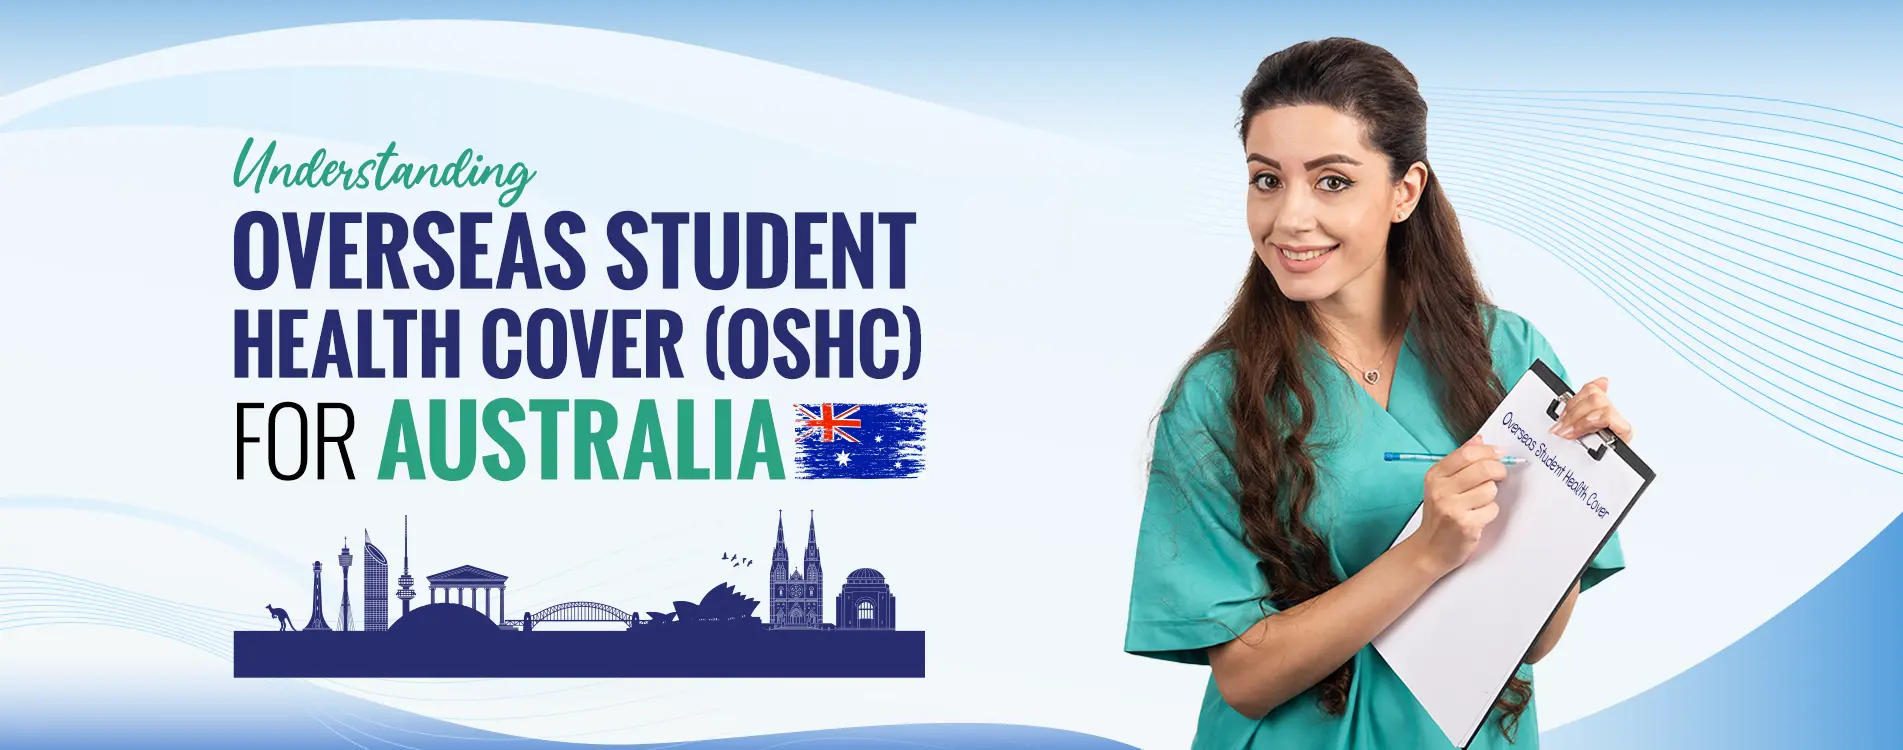 Understanding Overseas Student Health Cover (OSHC) for Australia